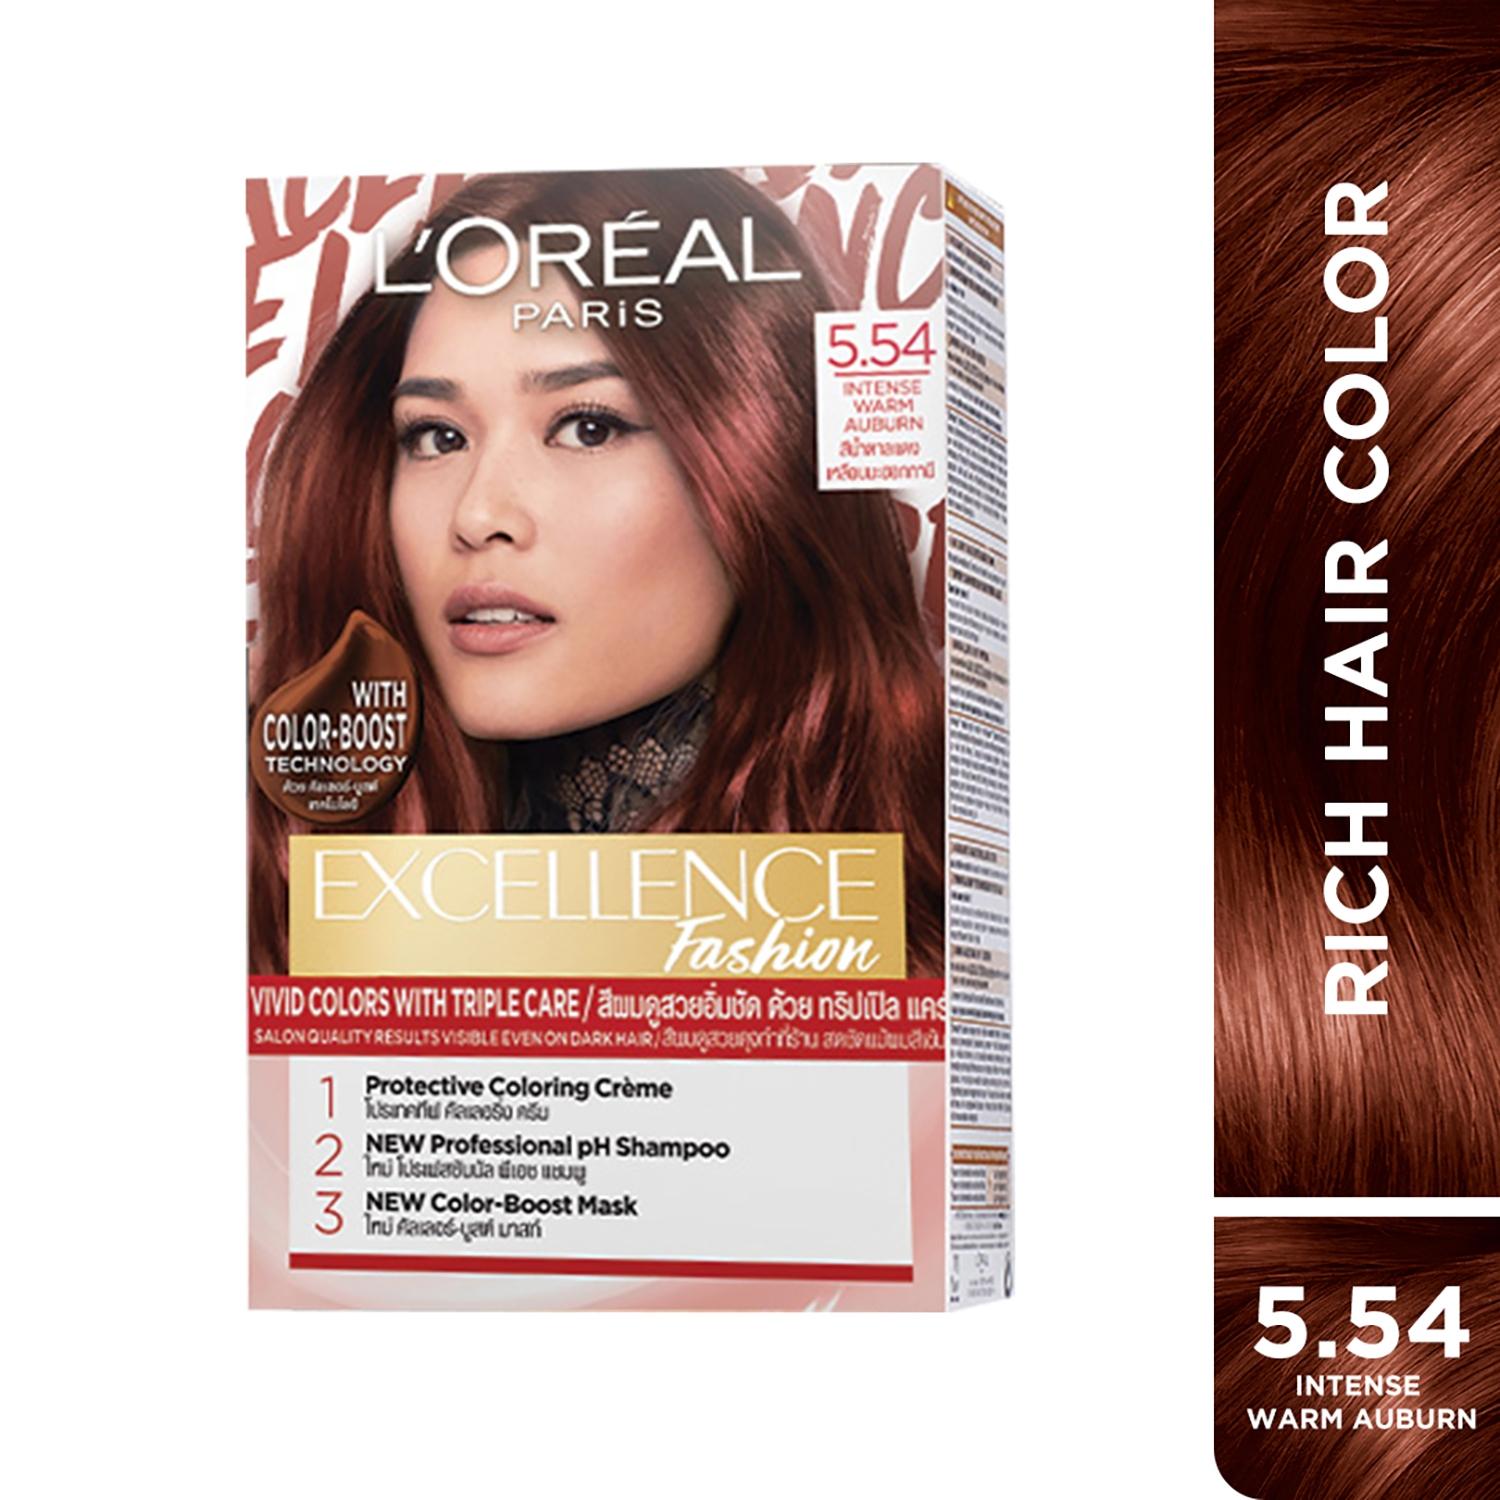 l'oreal-paris-excellence-fashion-highlights-hair-color,-5.54-intense-warm-auburn